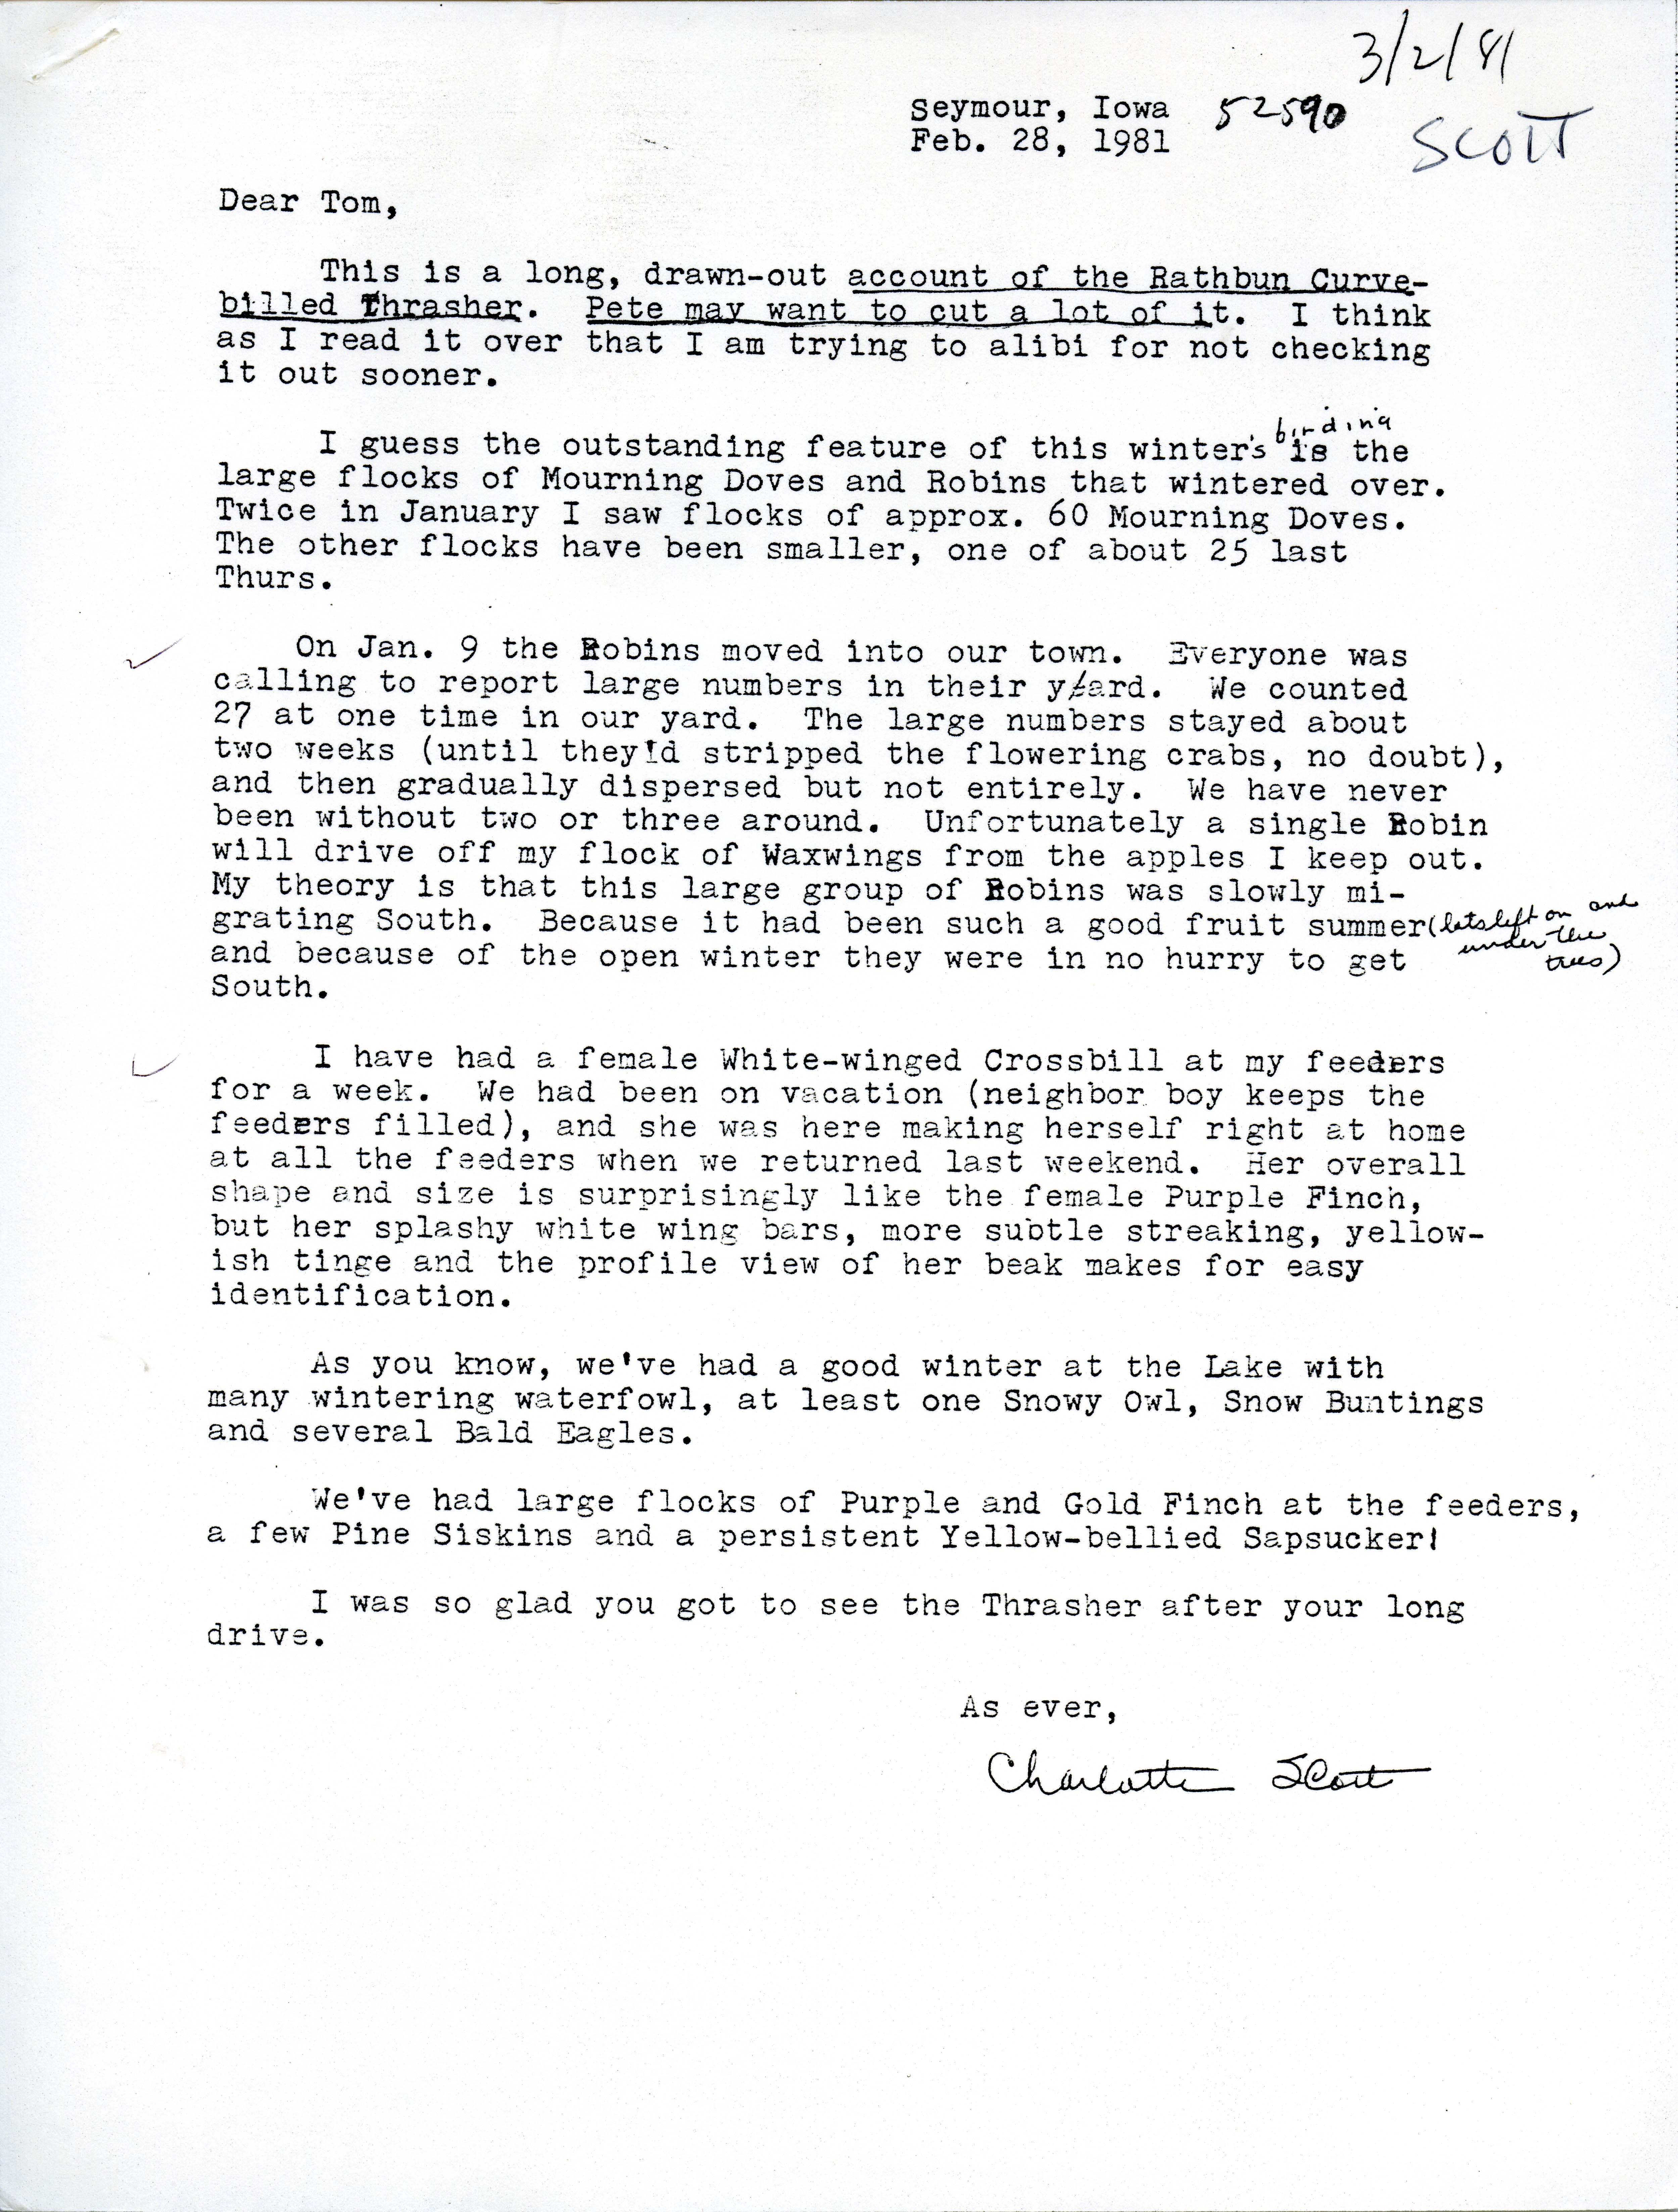 Charlotte Scott letter to Thomas Kent regarding Curve-billed Thrasher sighting, February 28, 1981